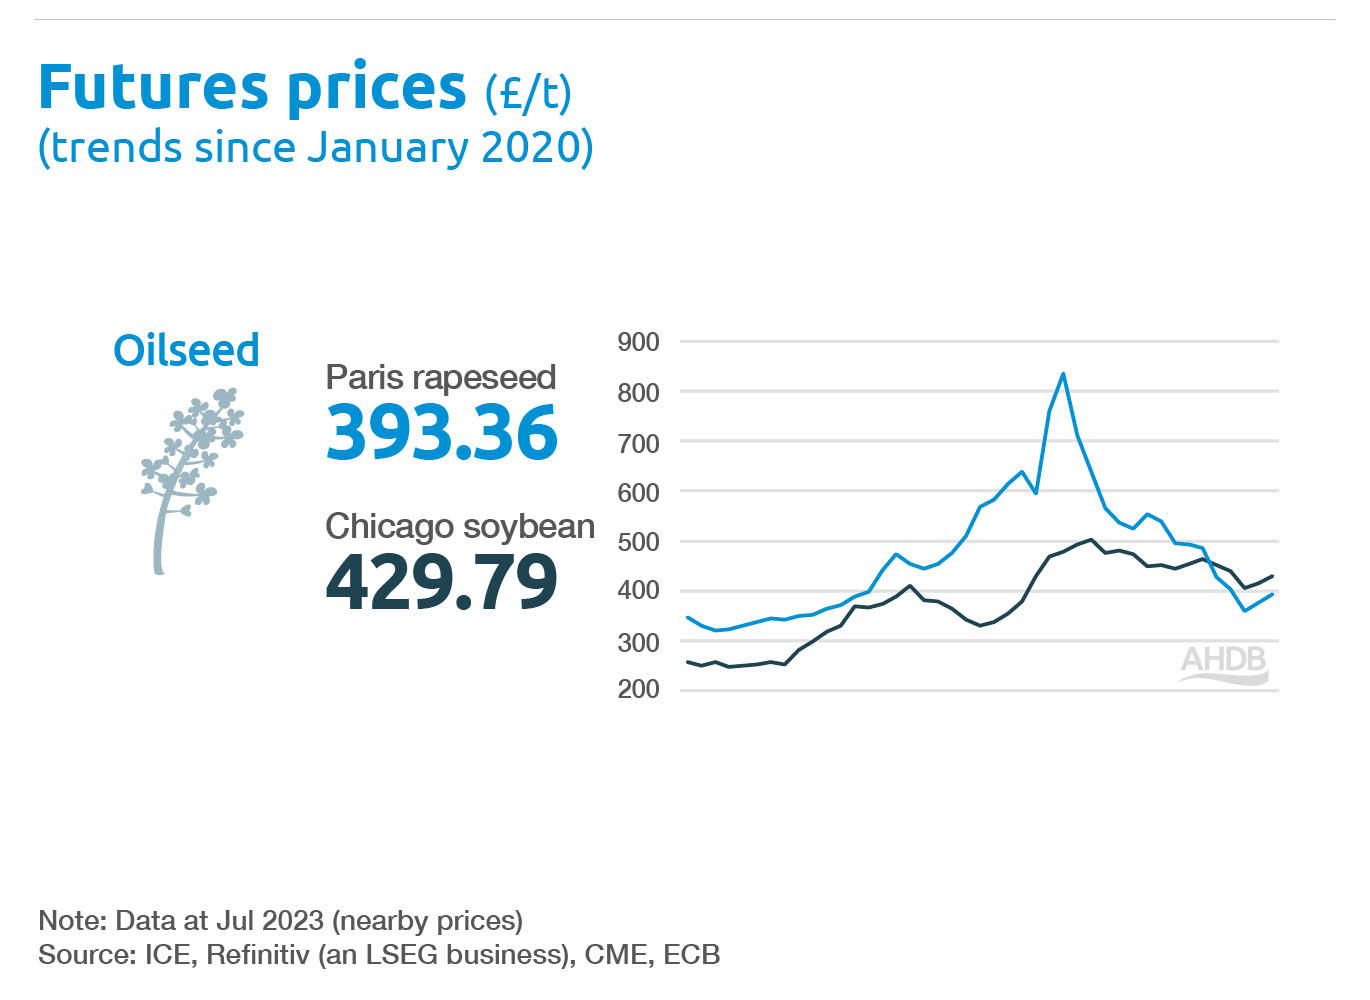 Oilseed futures prices